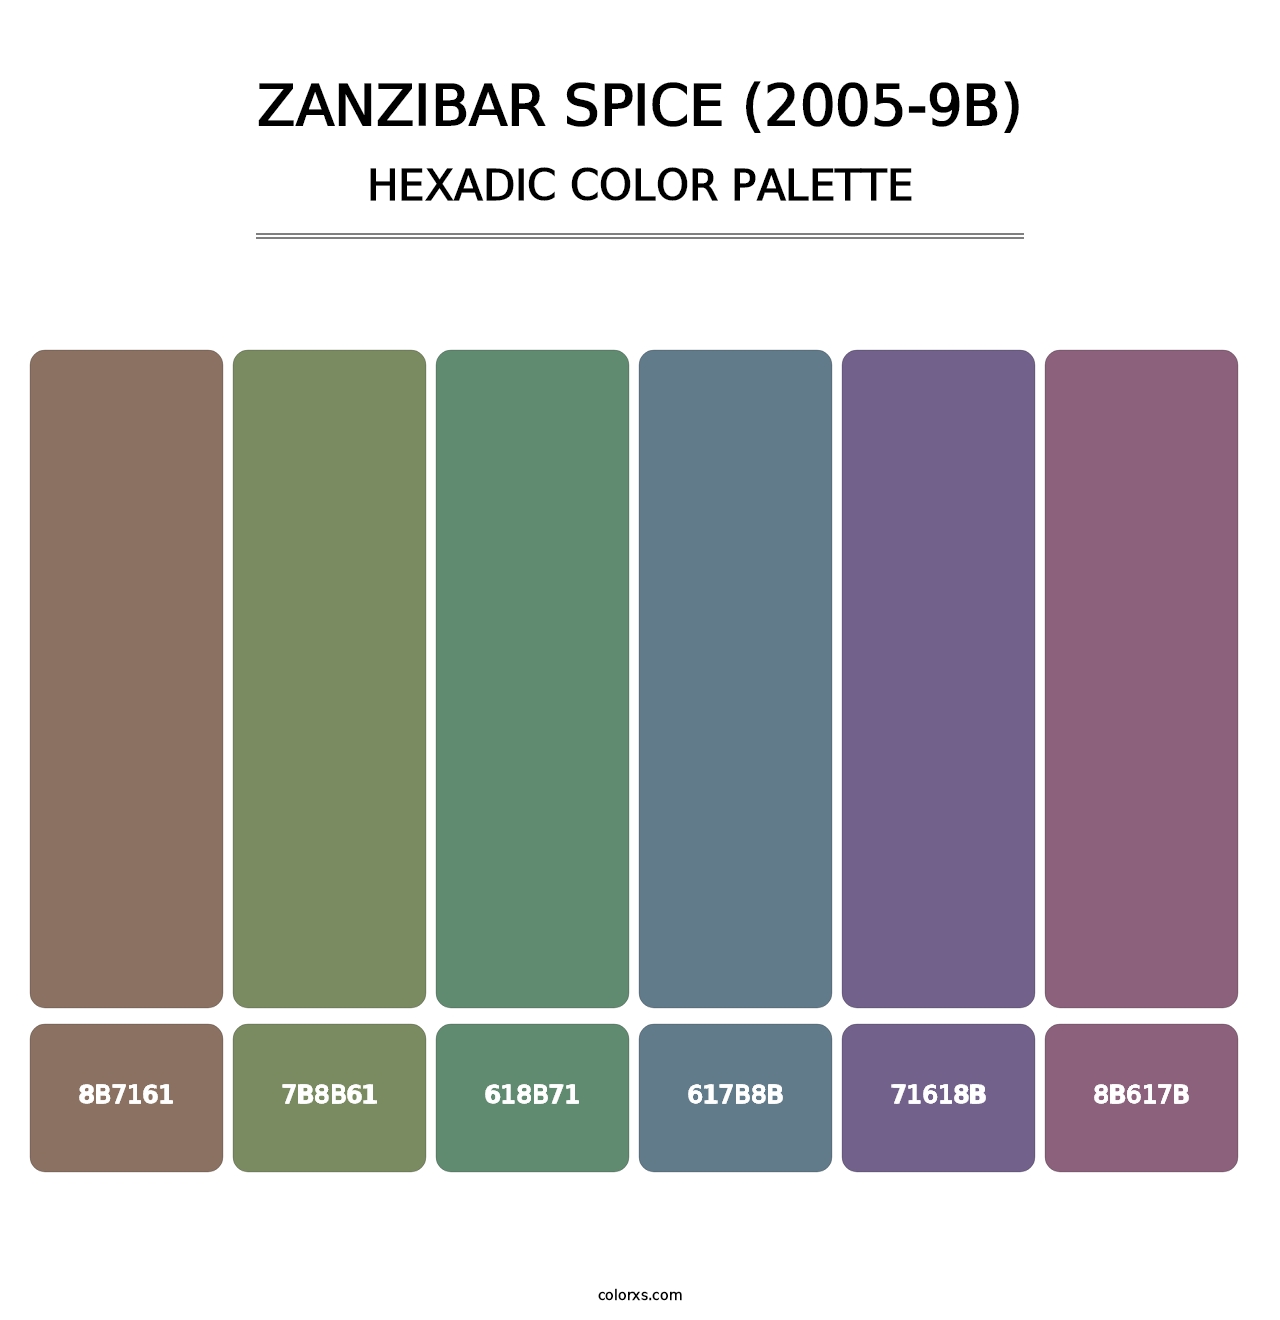 Zanzibar Spice (2005-9B) - Hexadic Color Palette